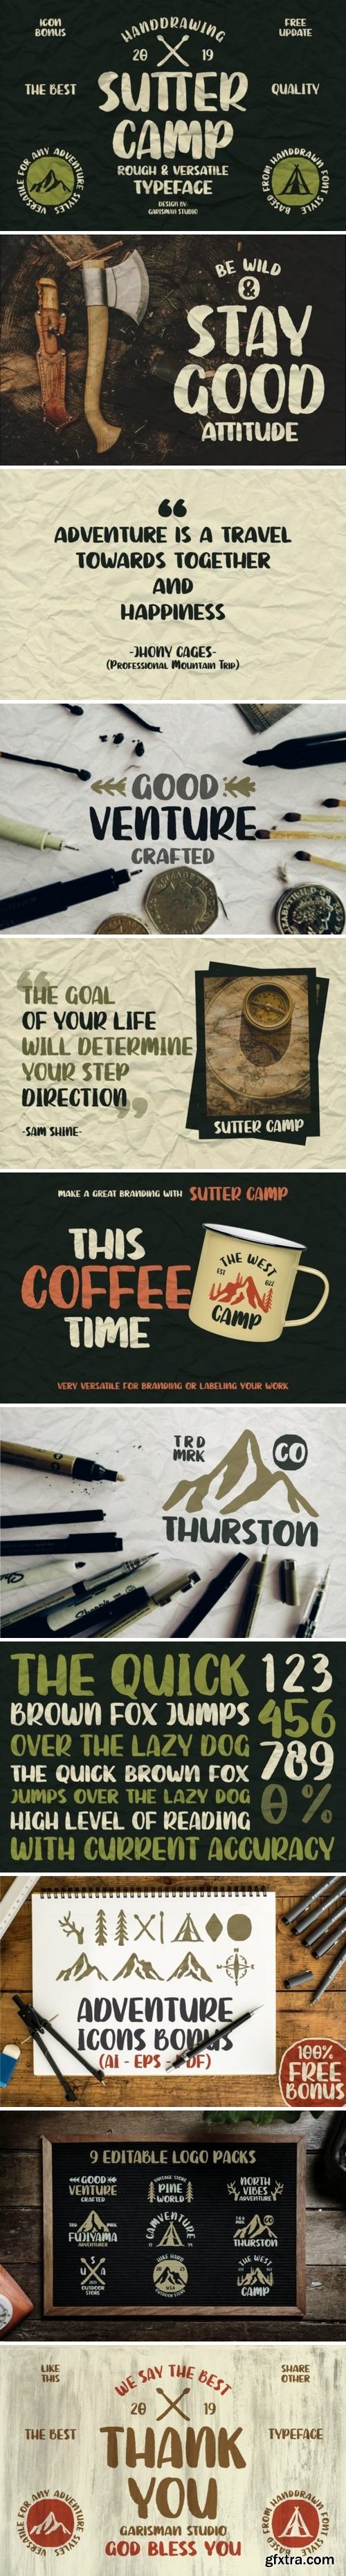 CM - Sutter Camp 3475674